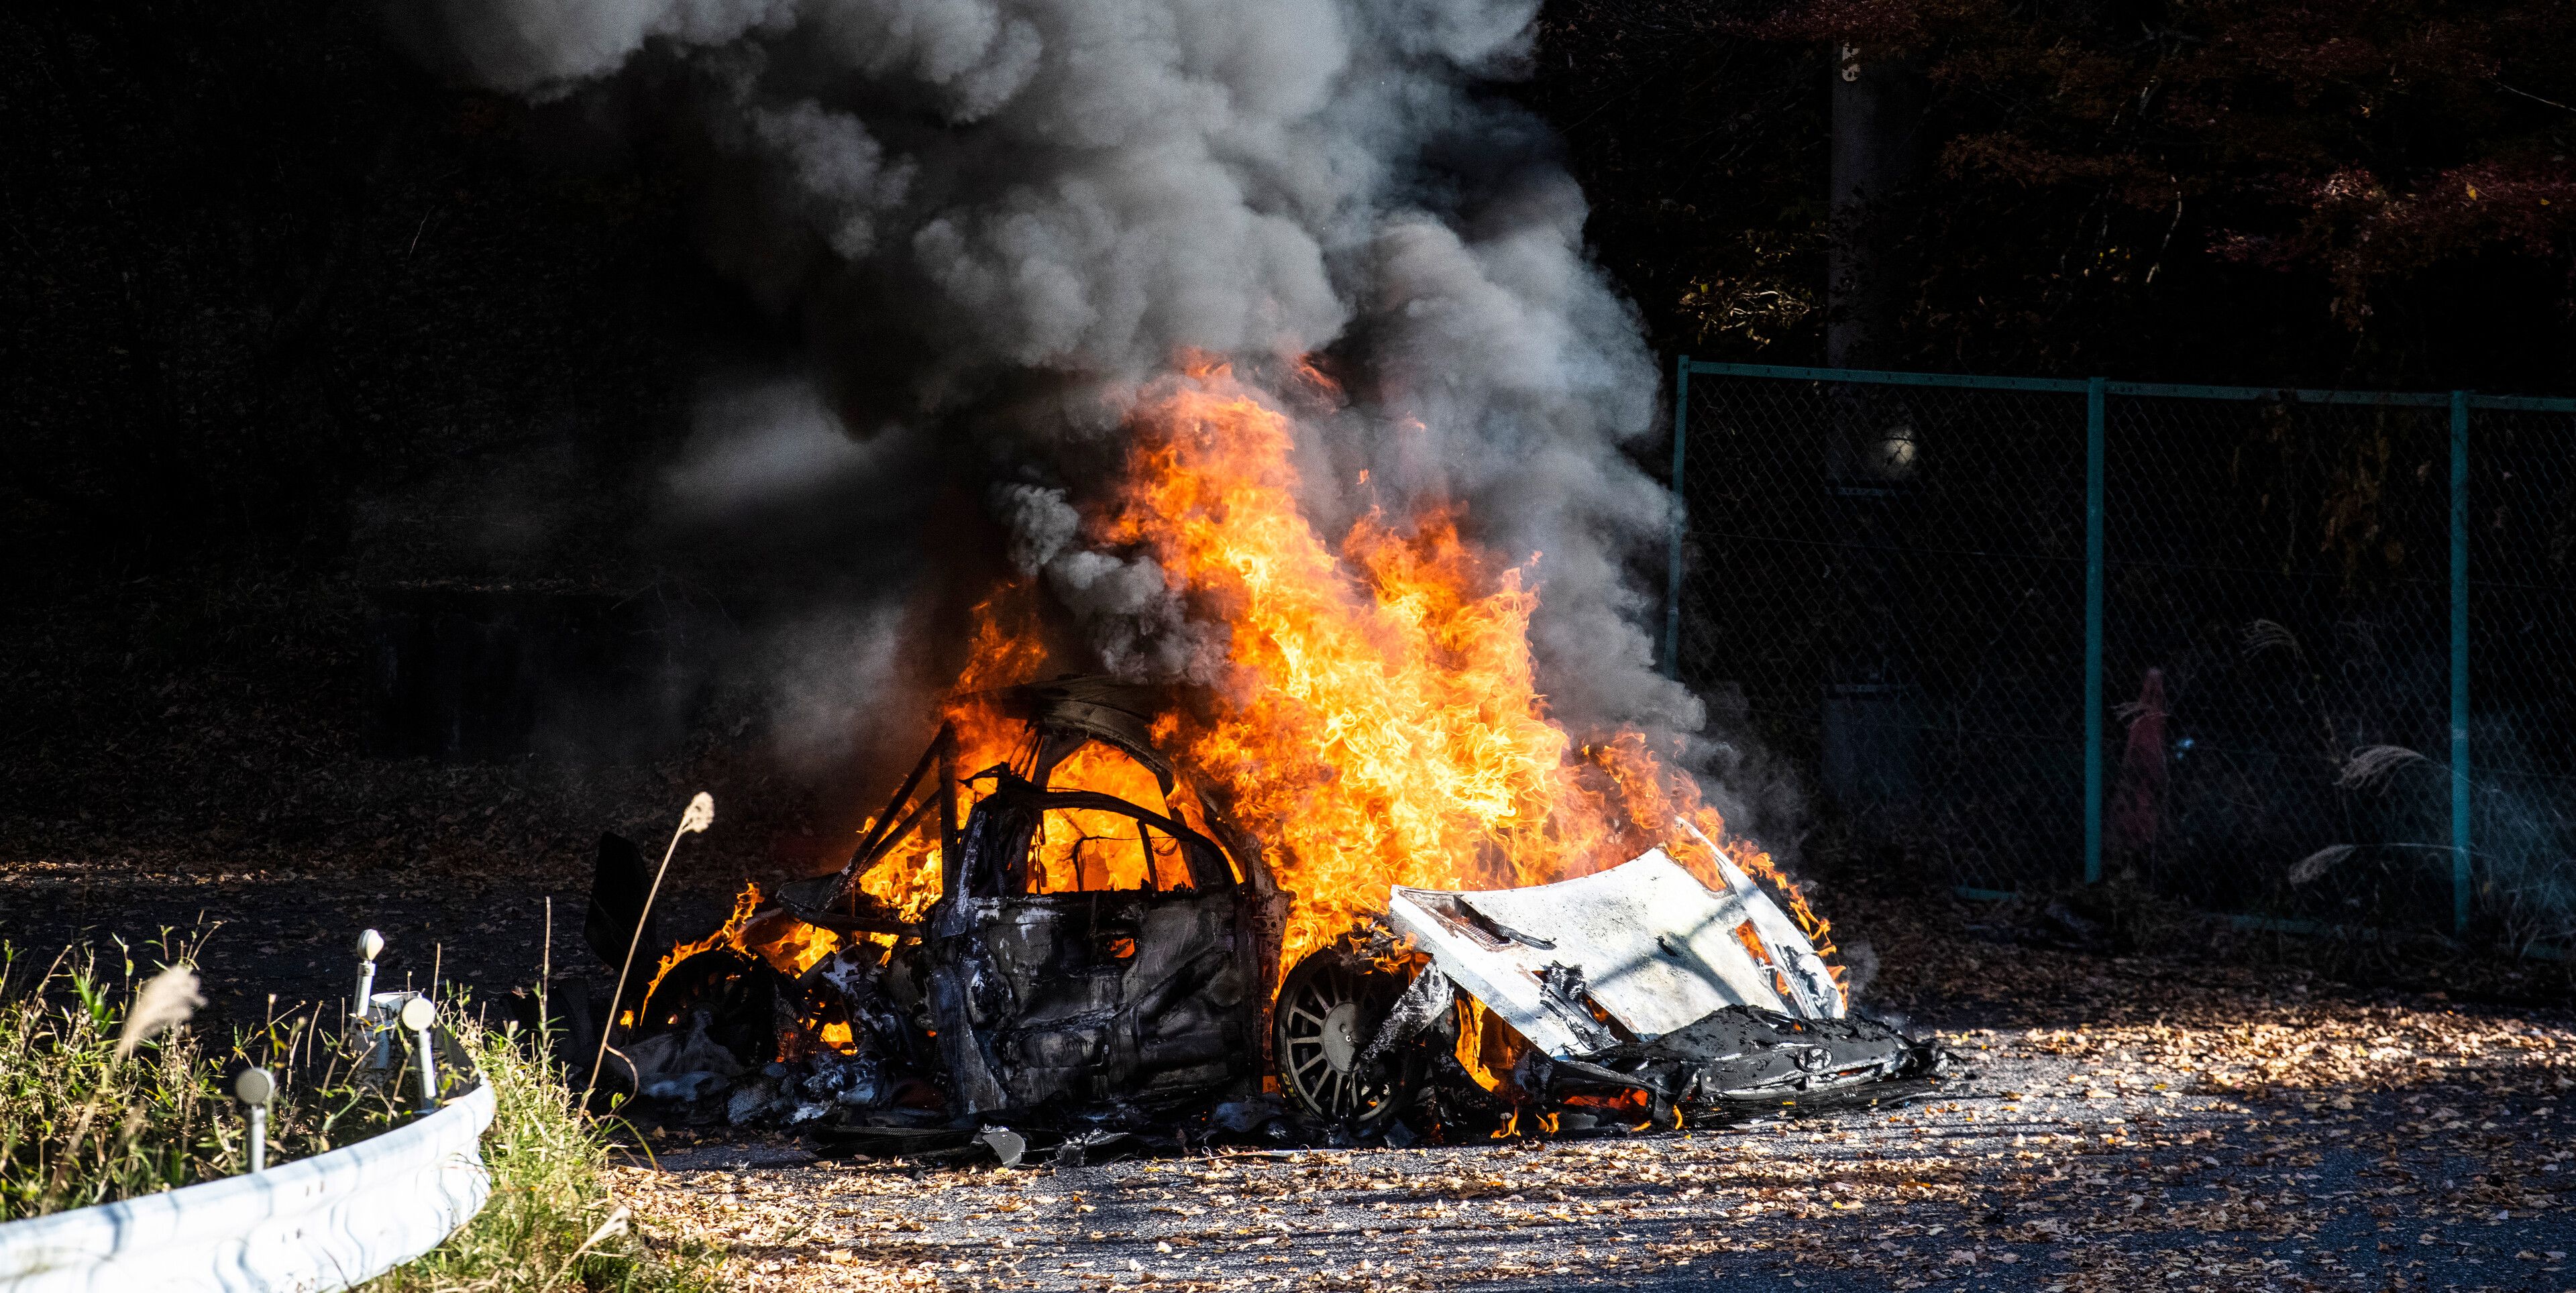 Hybrid Hyundai WRC Rally Car Catches Fire, Burns for an Hour